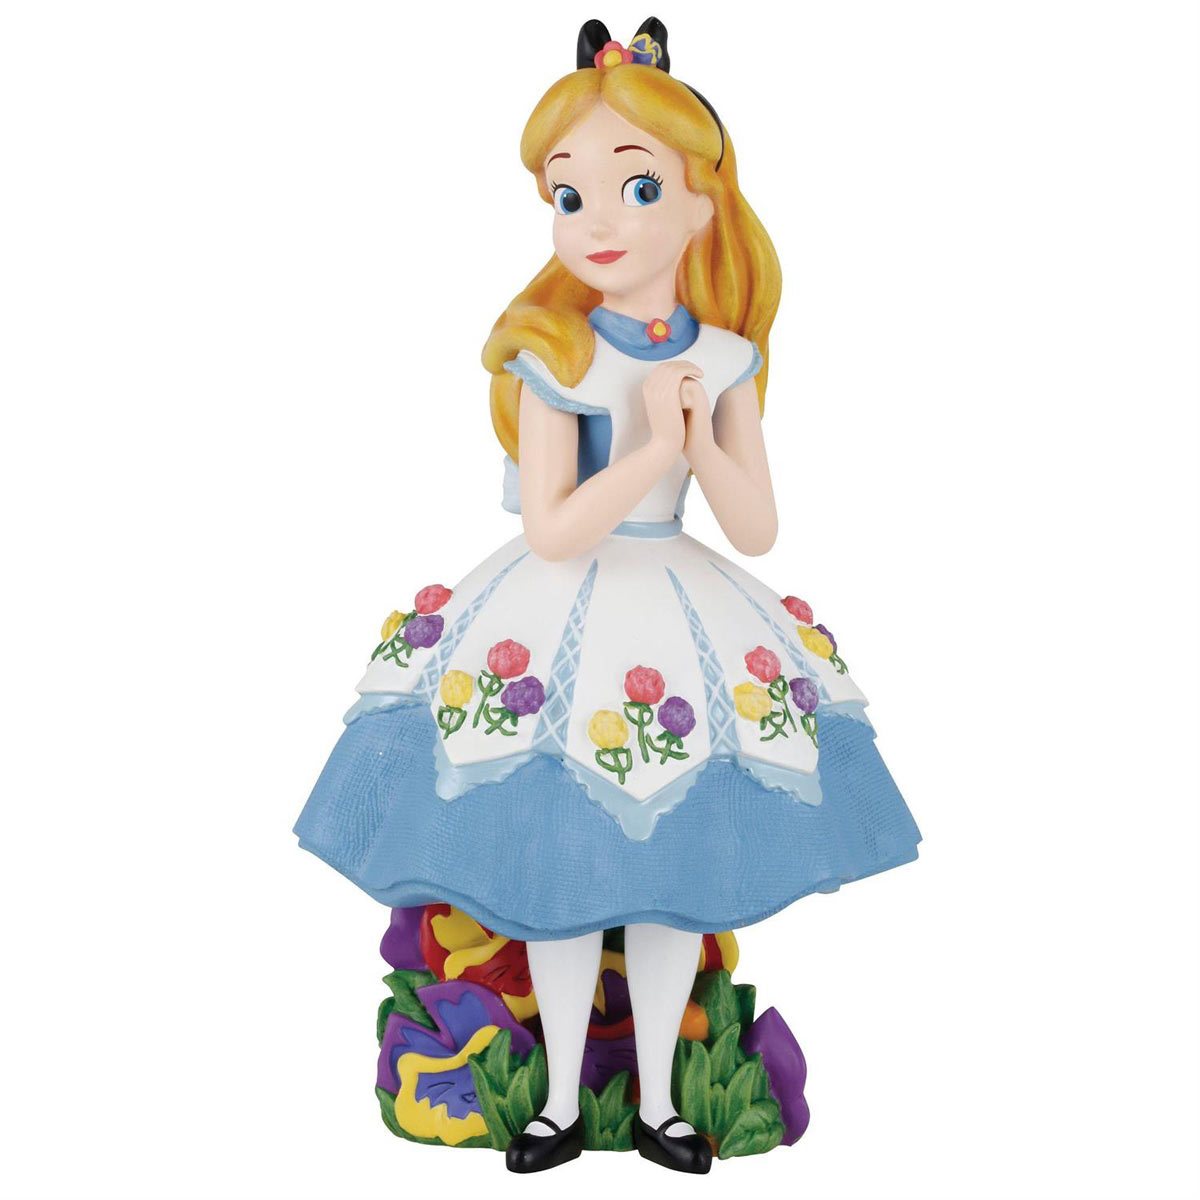  Alice in Wonderland Set 6 Ornaments PVC Figure Figurine Charms  4” : Home & Kitchen